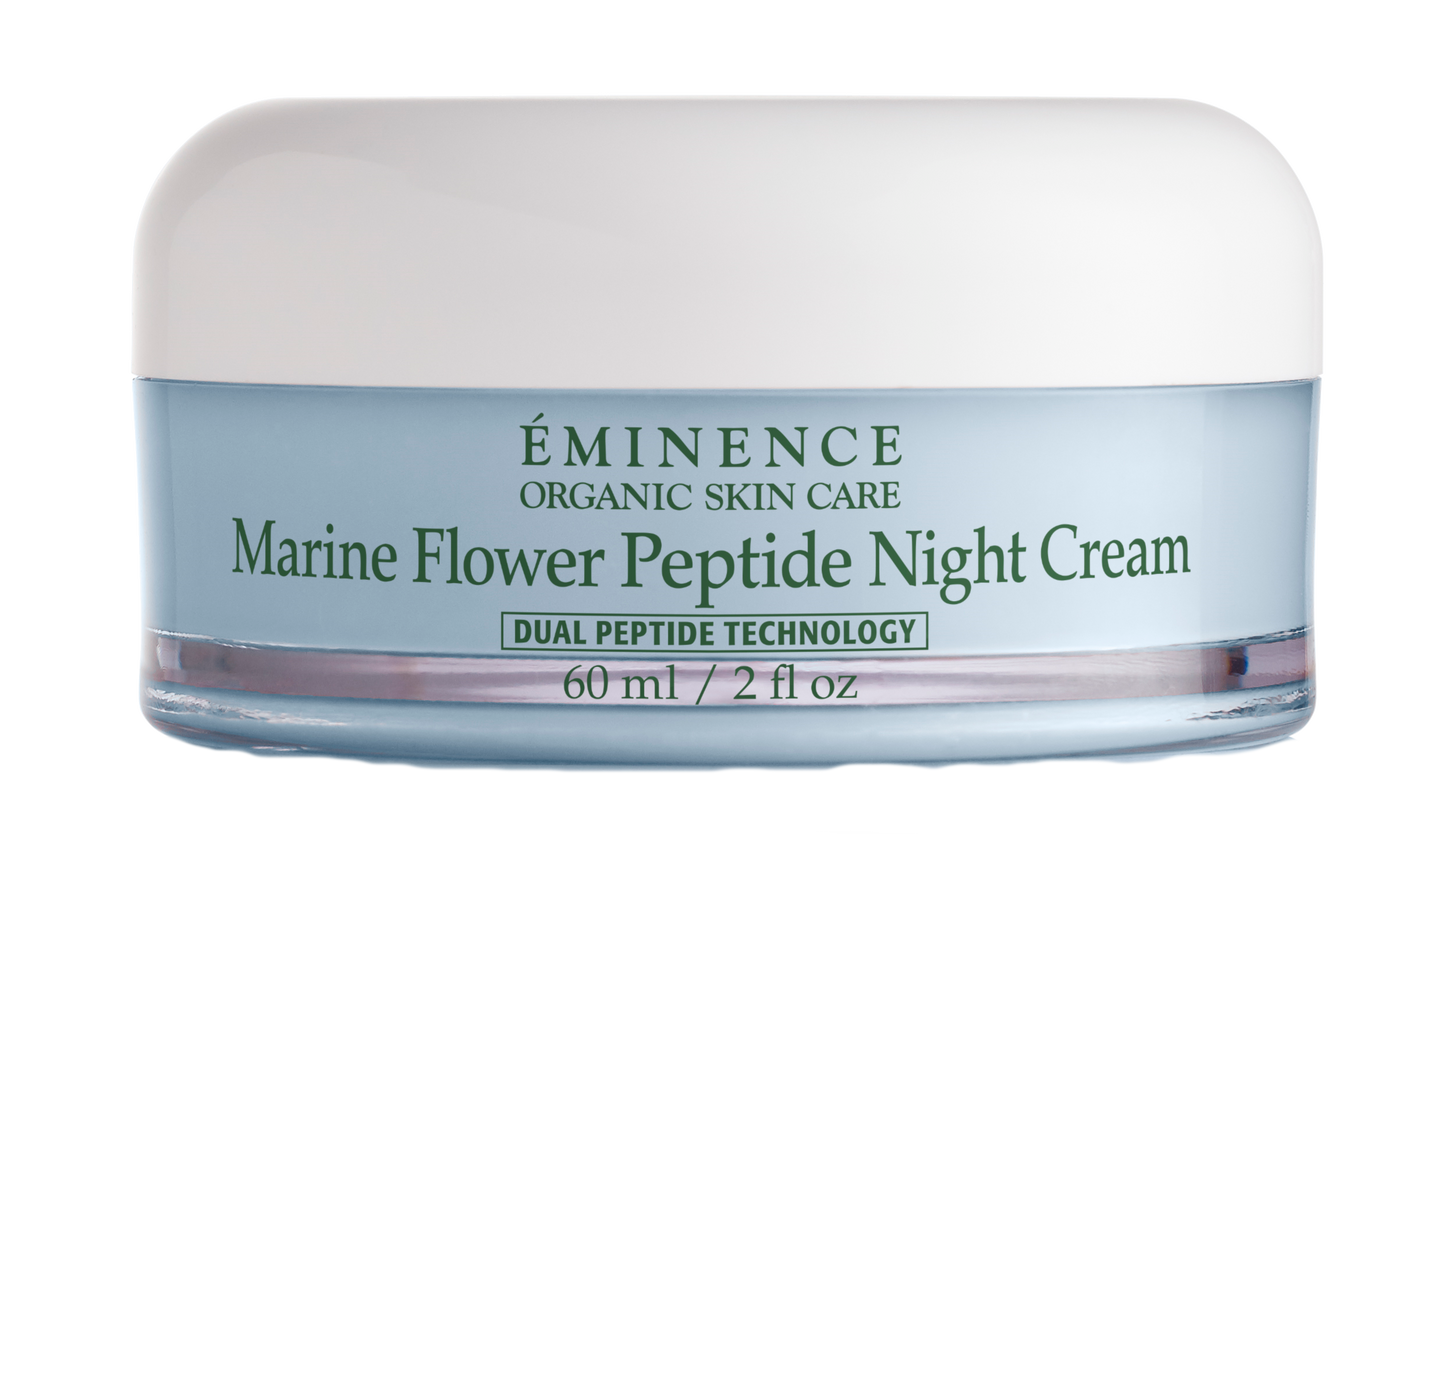 Marine Flower Peptide Night Cream ingrediënten